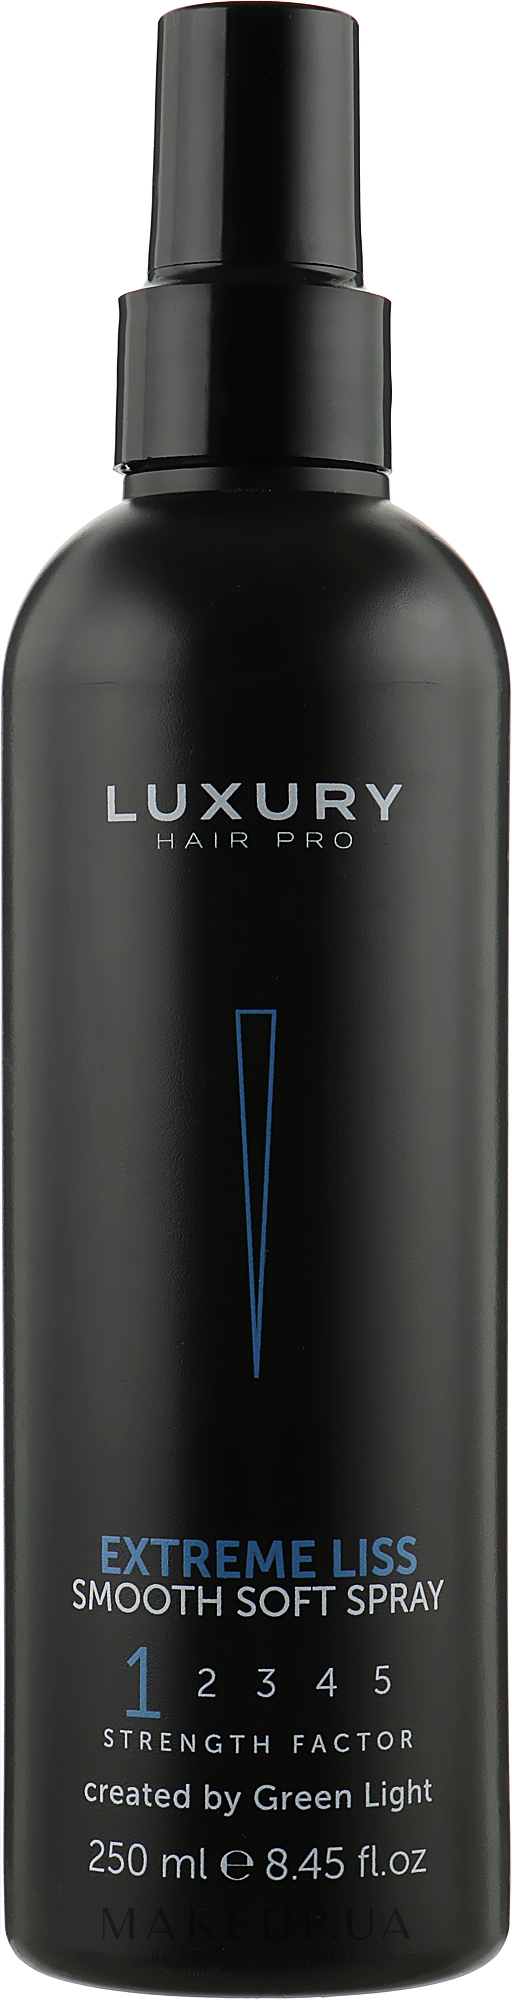 Мягкий разглаживающий спрей для волос - Green Light Luxury Hair Pro Extreme Liss Smooth Soft Spray — фото 250ml